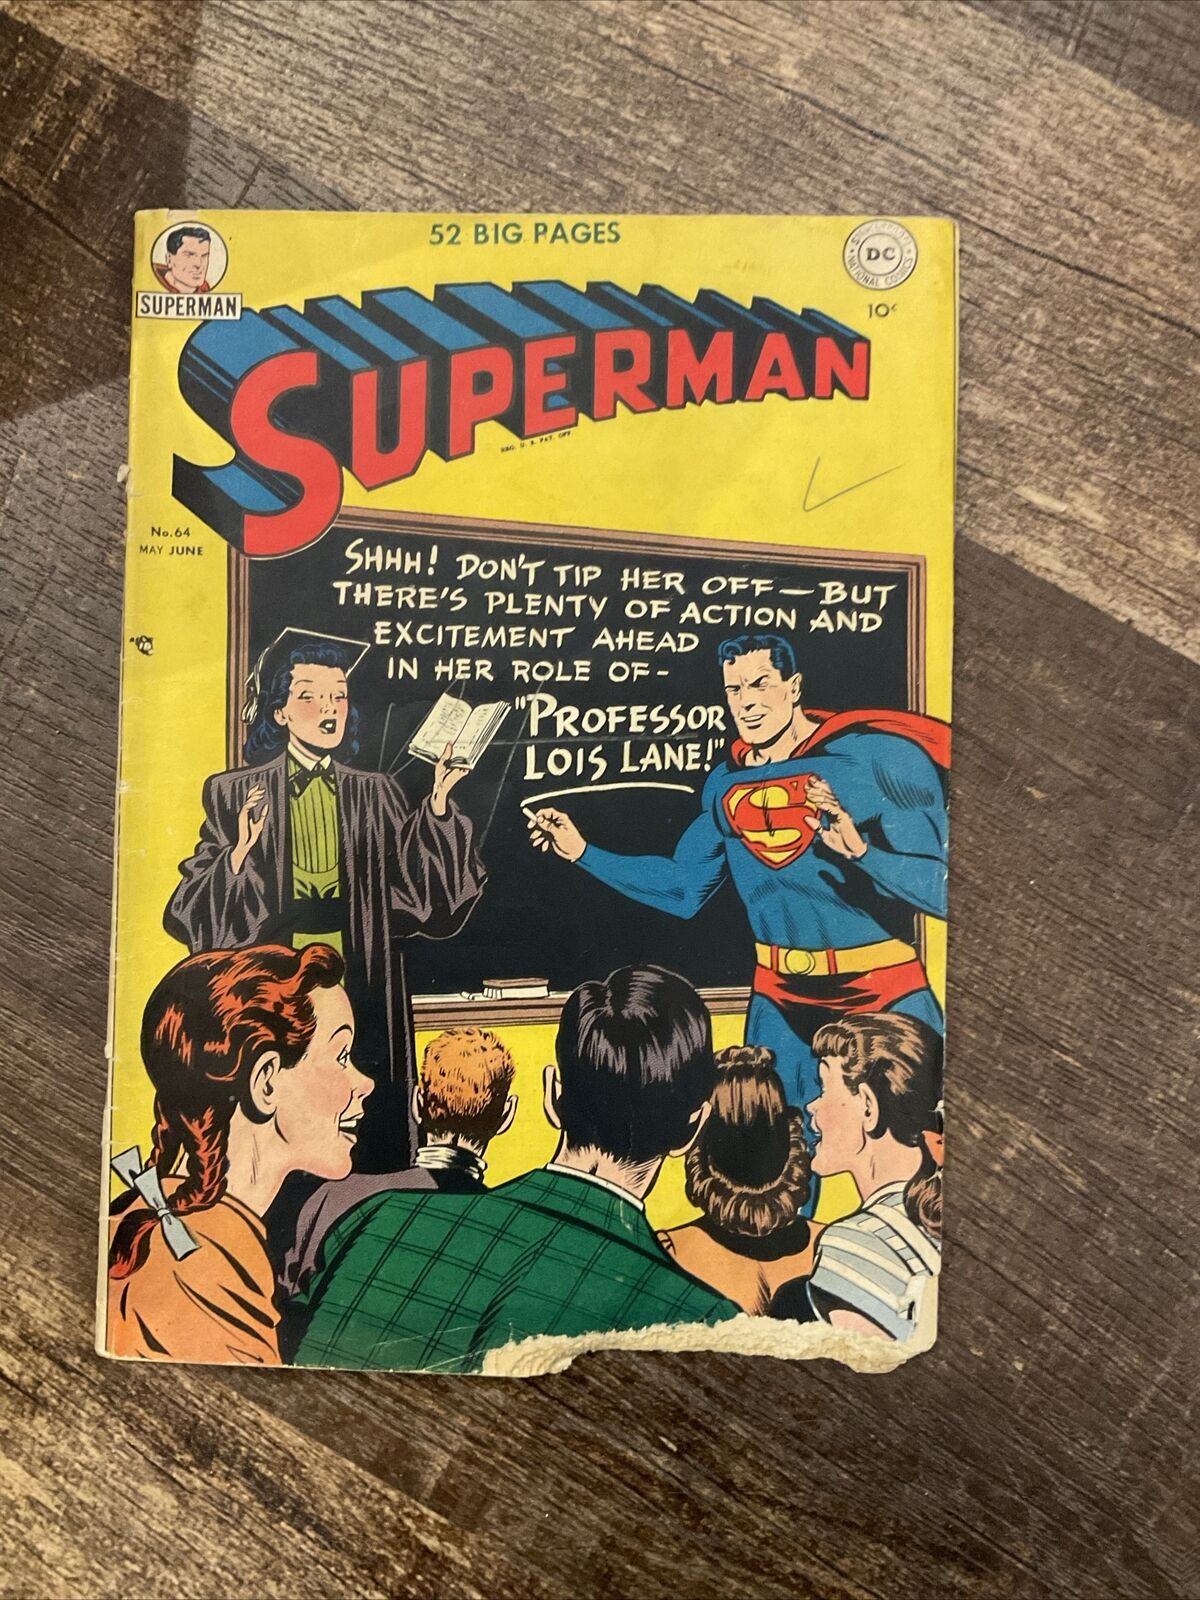 DC Comics 1950 SUPERMAN #64 GOLDEN AGE ISSUE 10 CENT COVER PRICE PRANKSTER